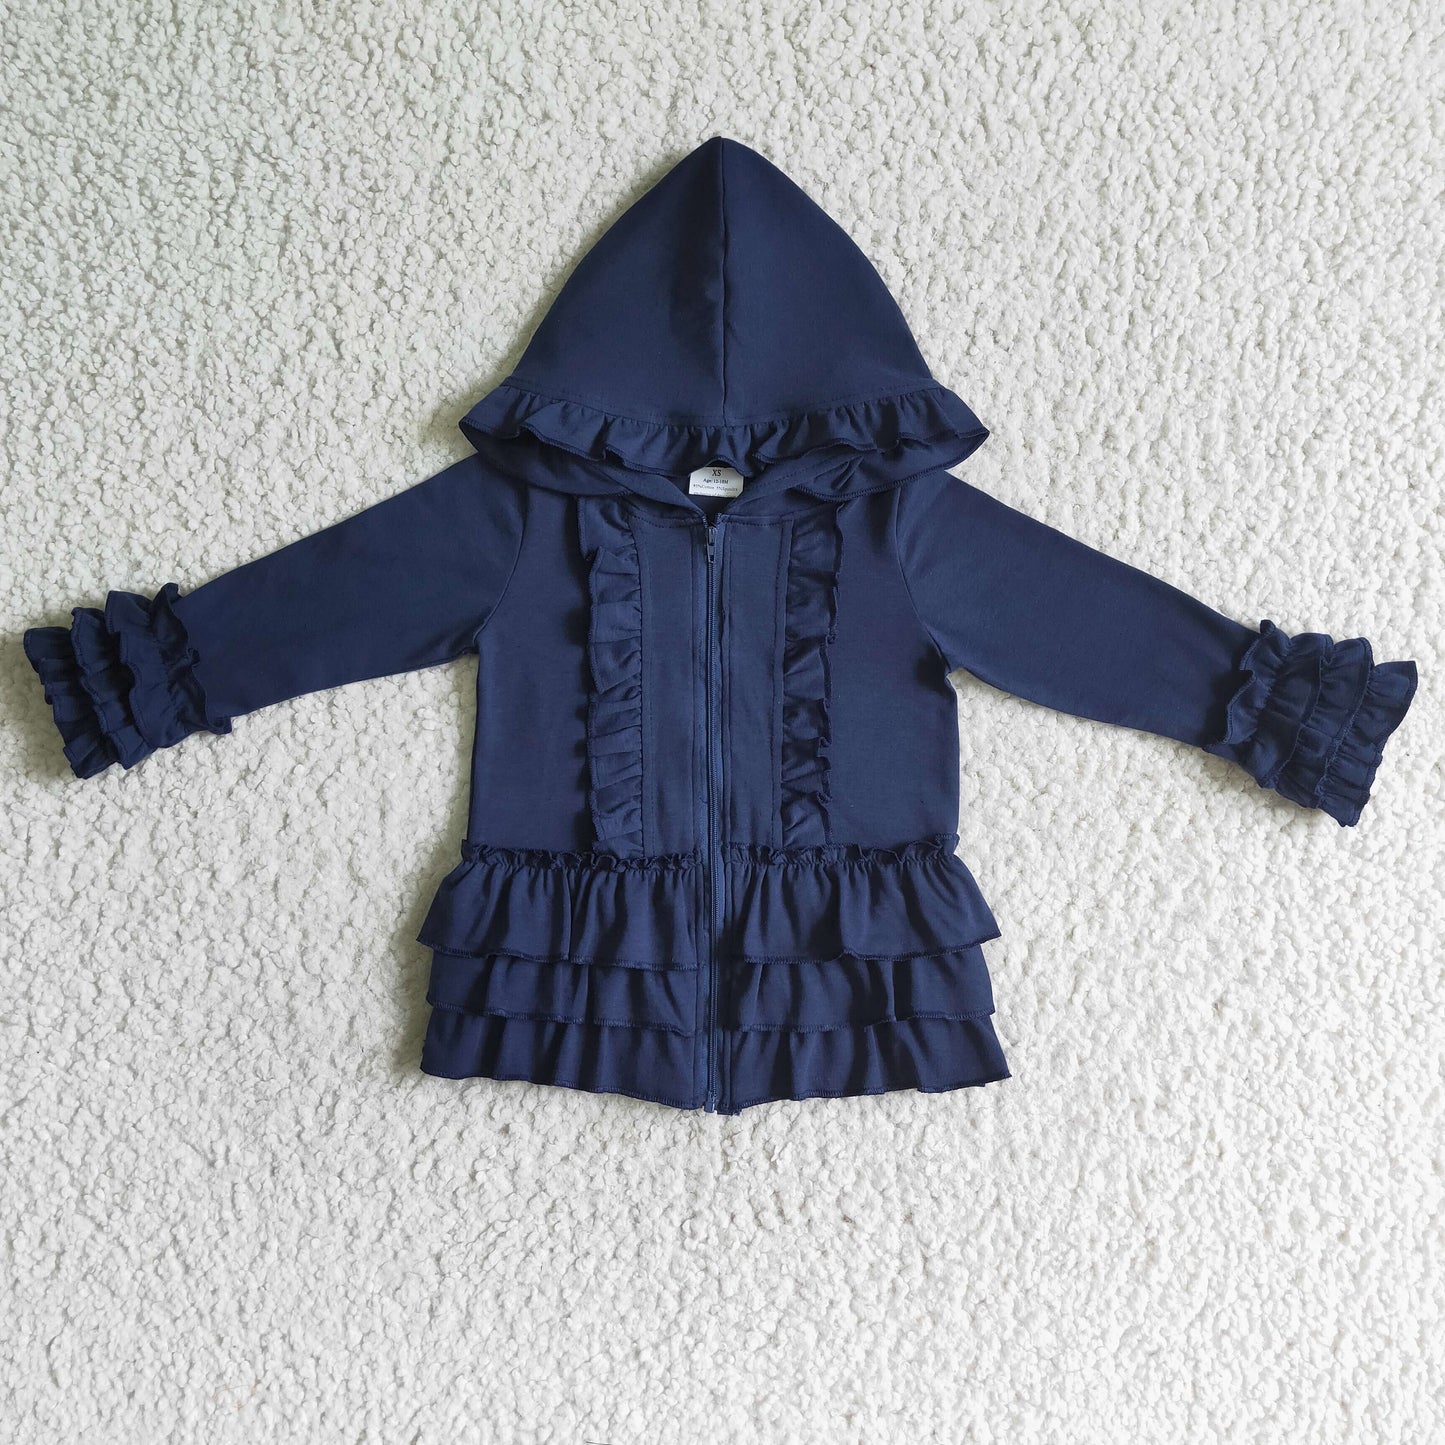 Solid blue zipper jacket girls ruffle hoodie cardigan